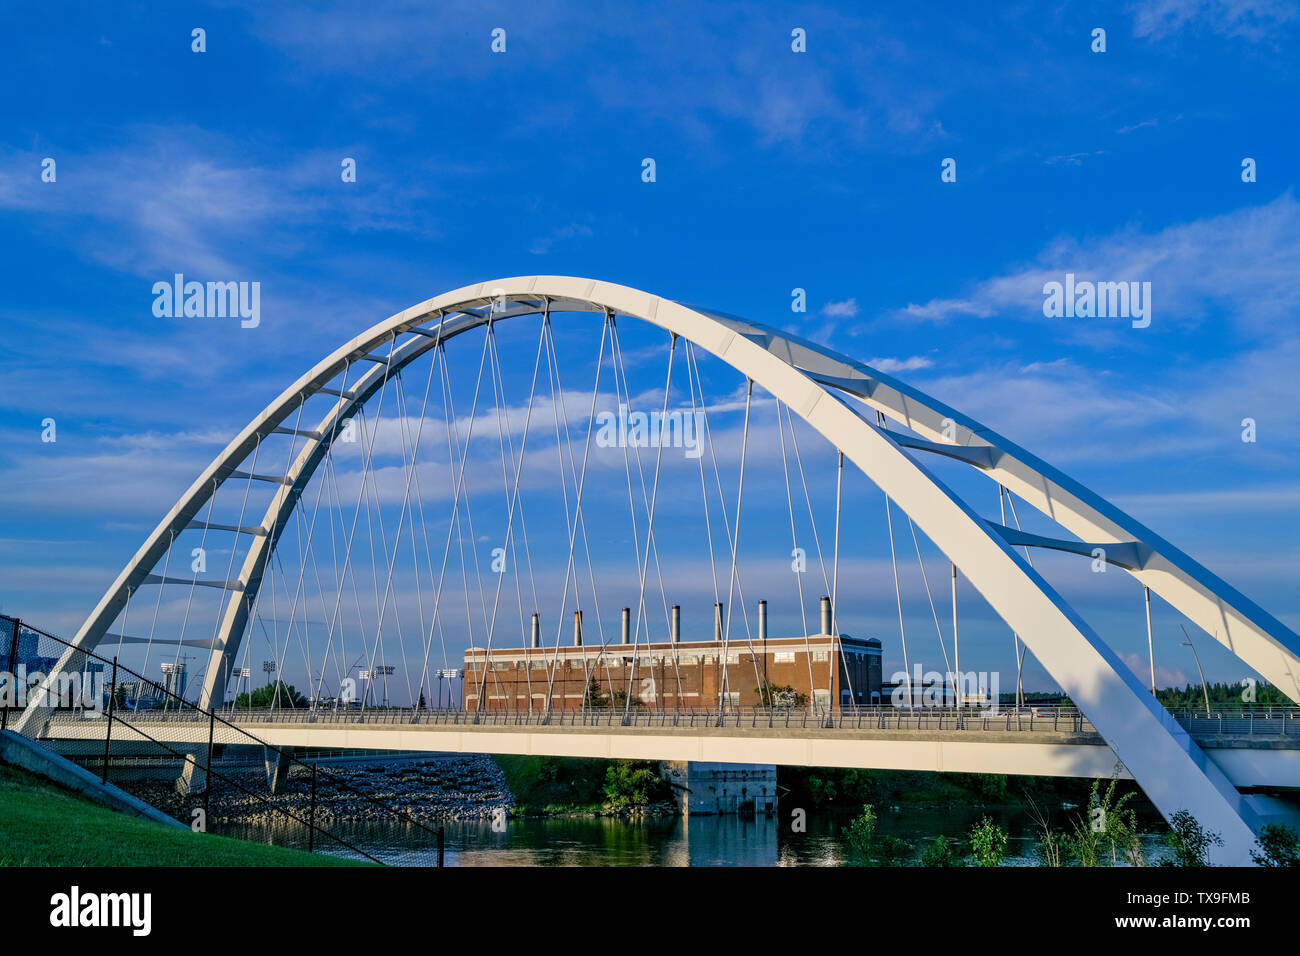 Walterdale Bridge, pont suspendu, de la rivière Saskatchewan Nord, Edmonton, Alberta, Canada Banque D'Images